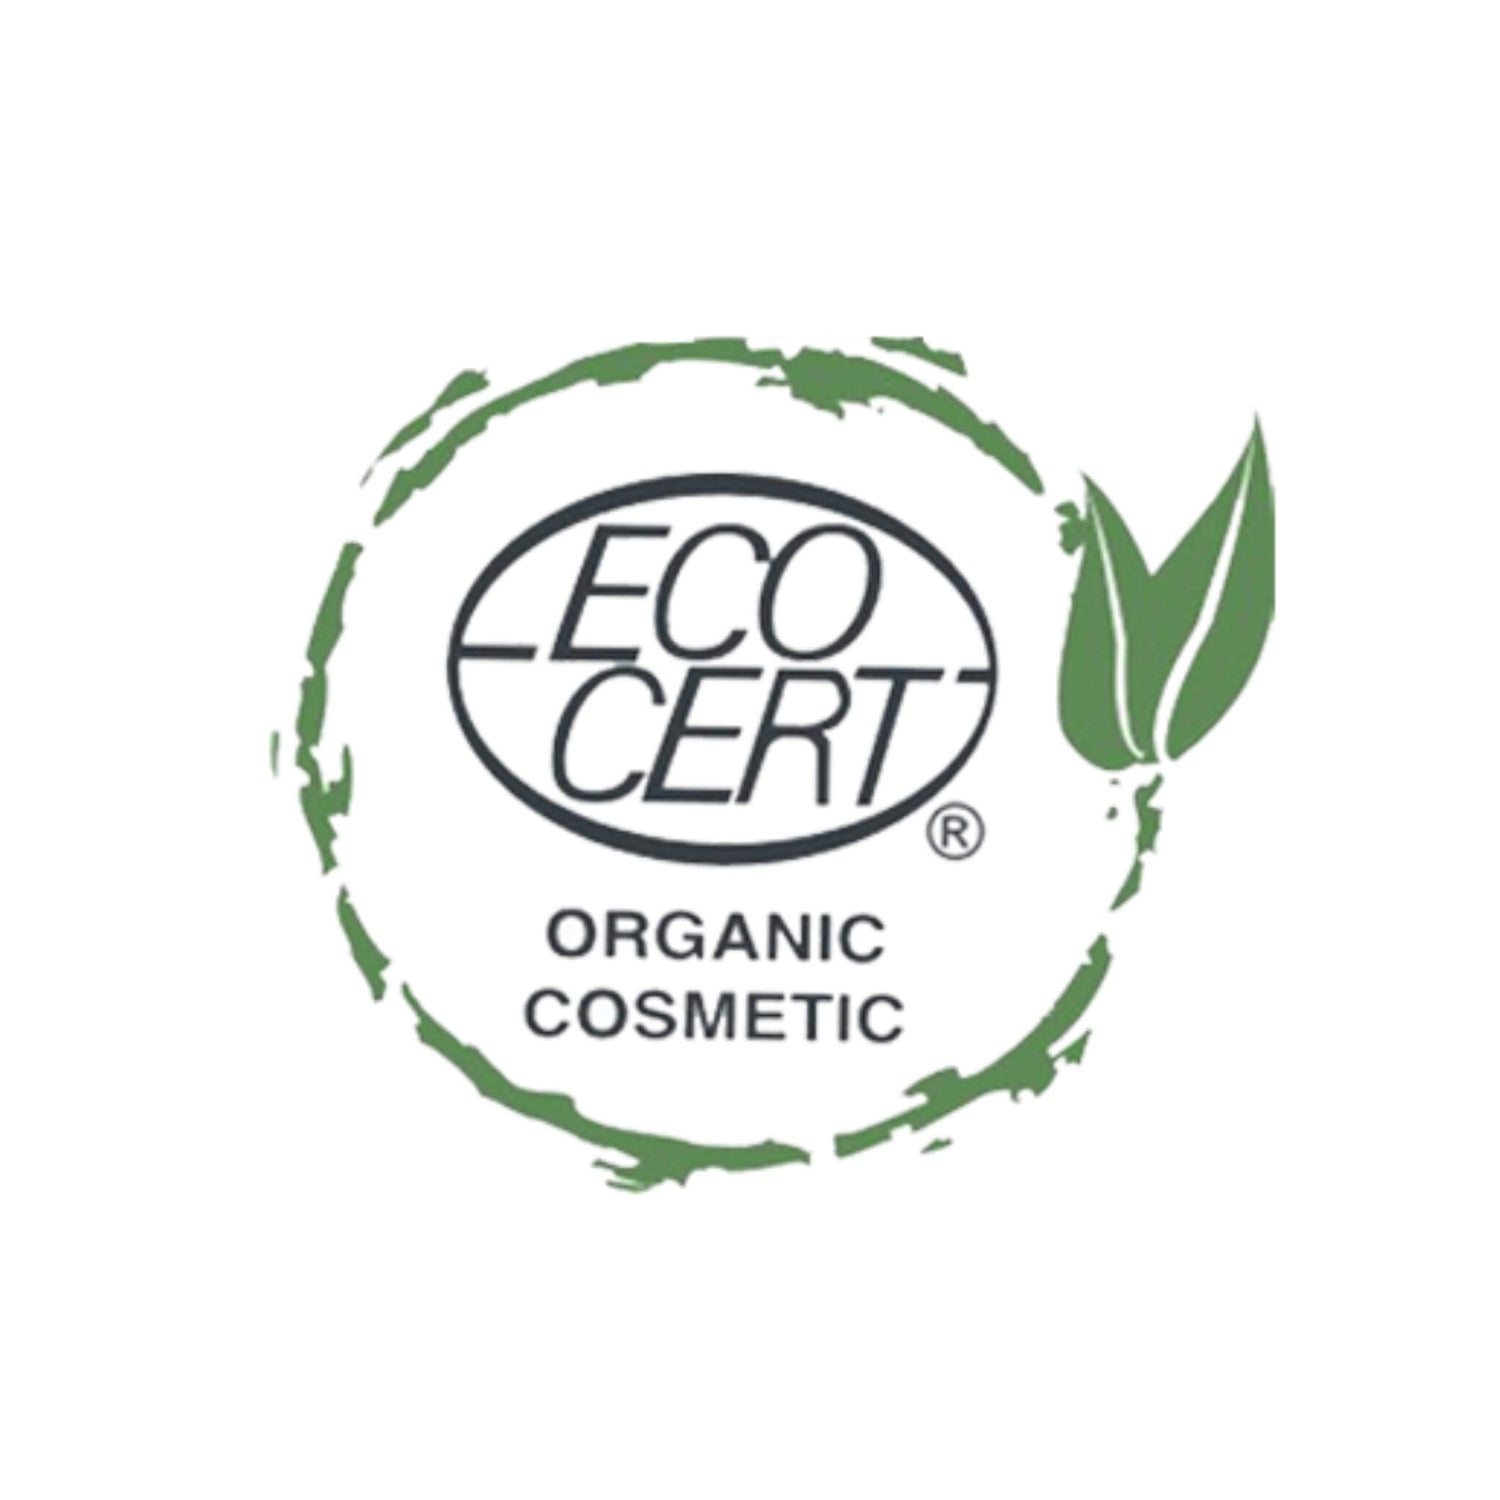 Organic Cosmetics certification ecocert cosmos